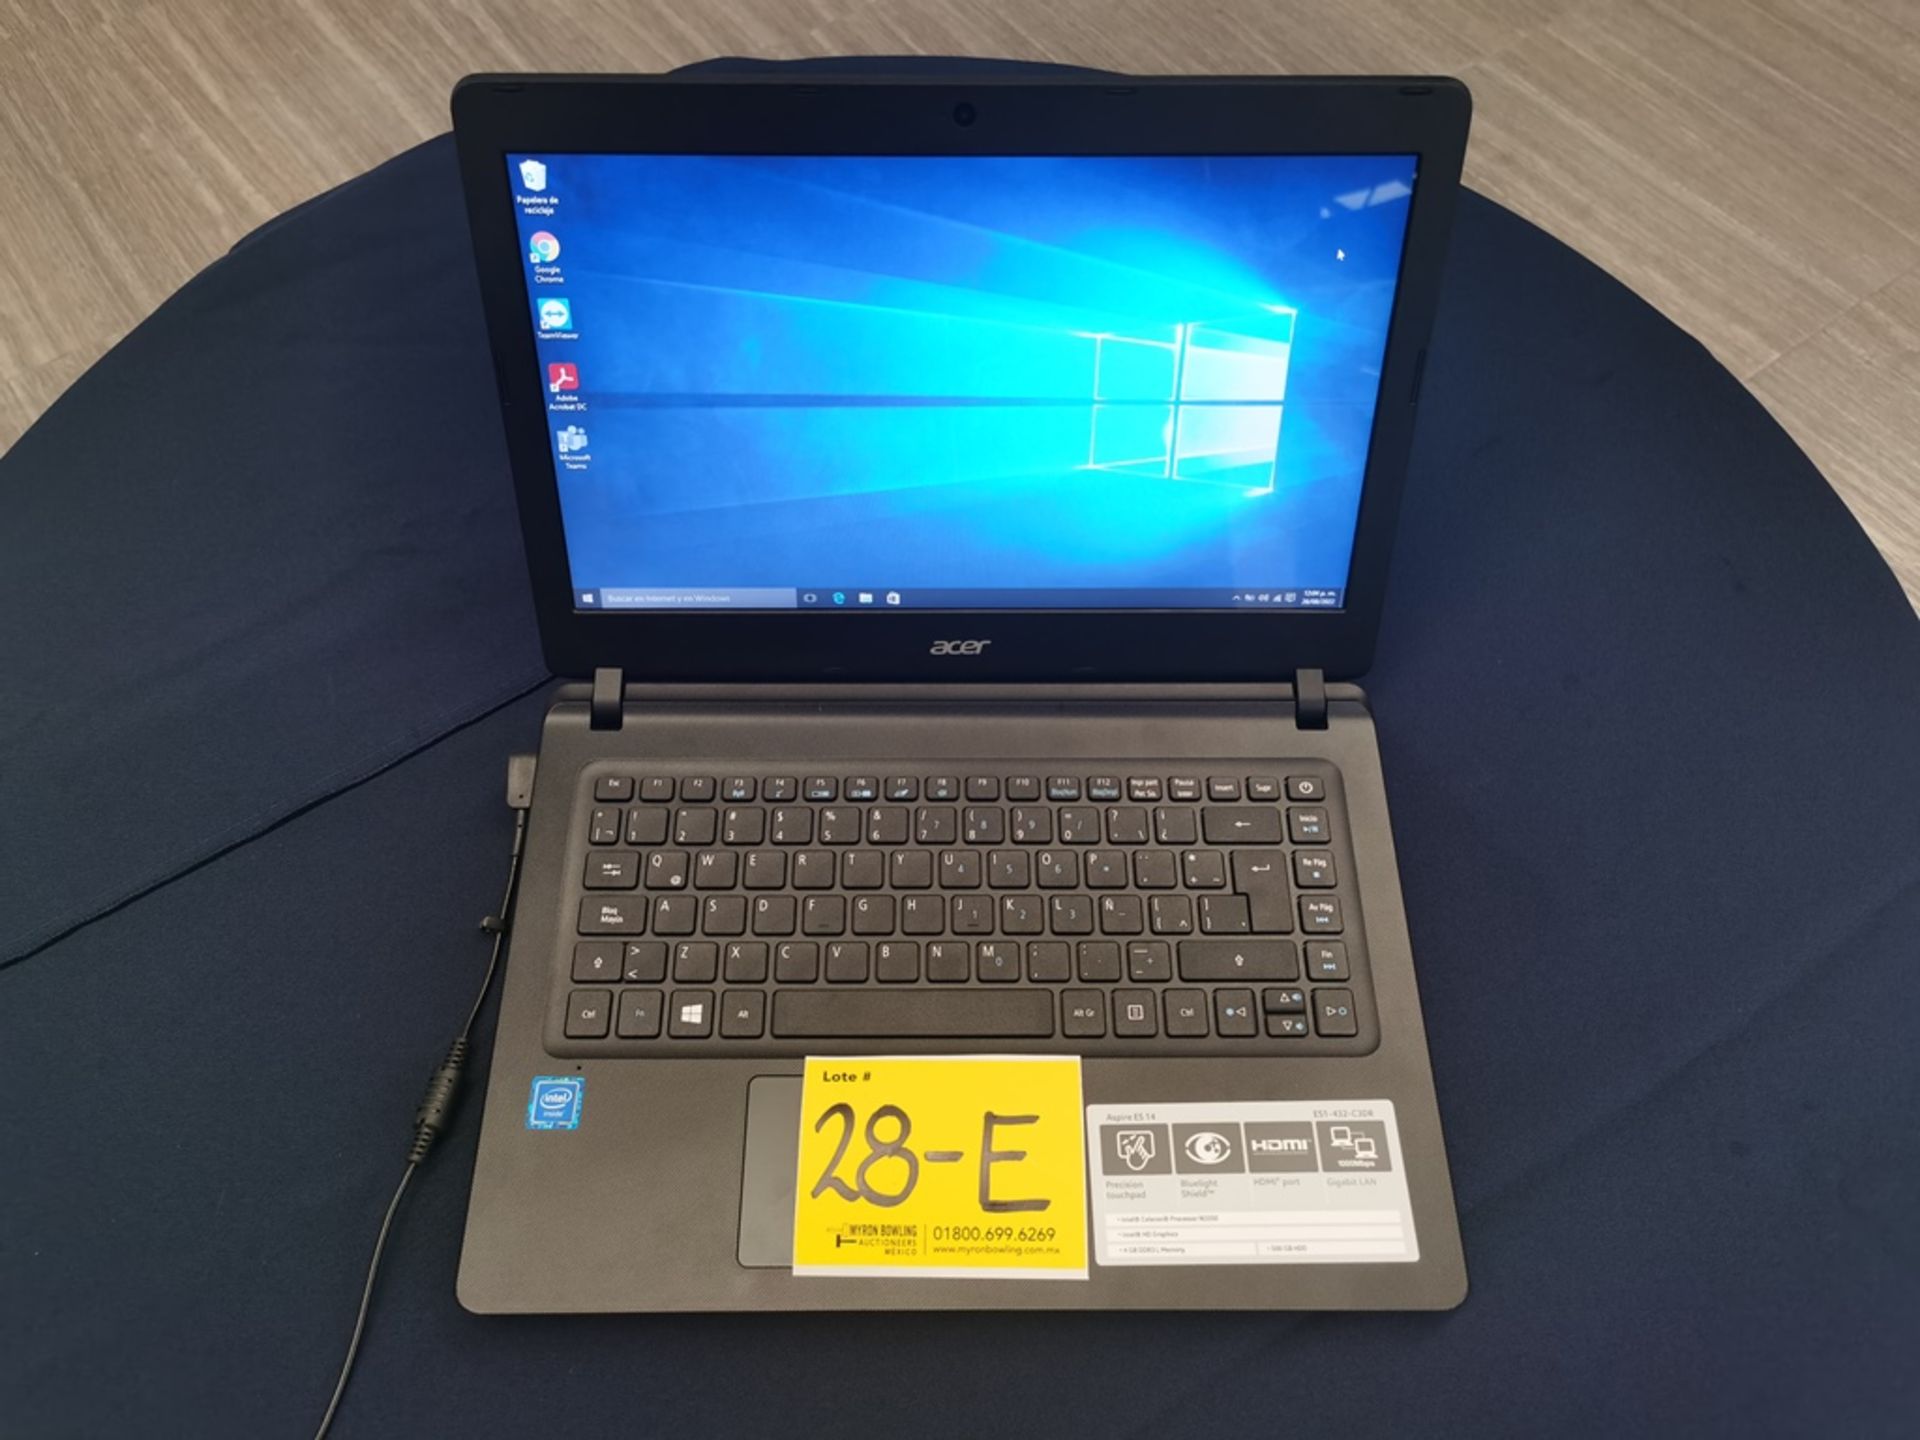 1 Computadora tipo Laptop Marca Acer Modelo Aspire ES-14 N16Q8, Serie NXGFSAL001716173D27600, Color